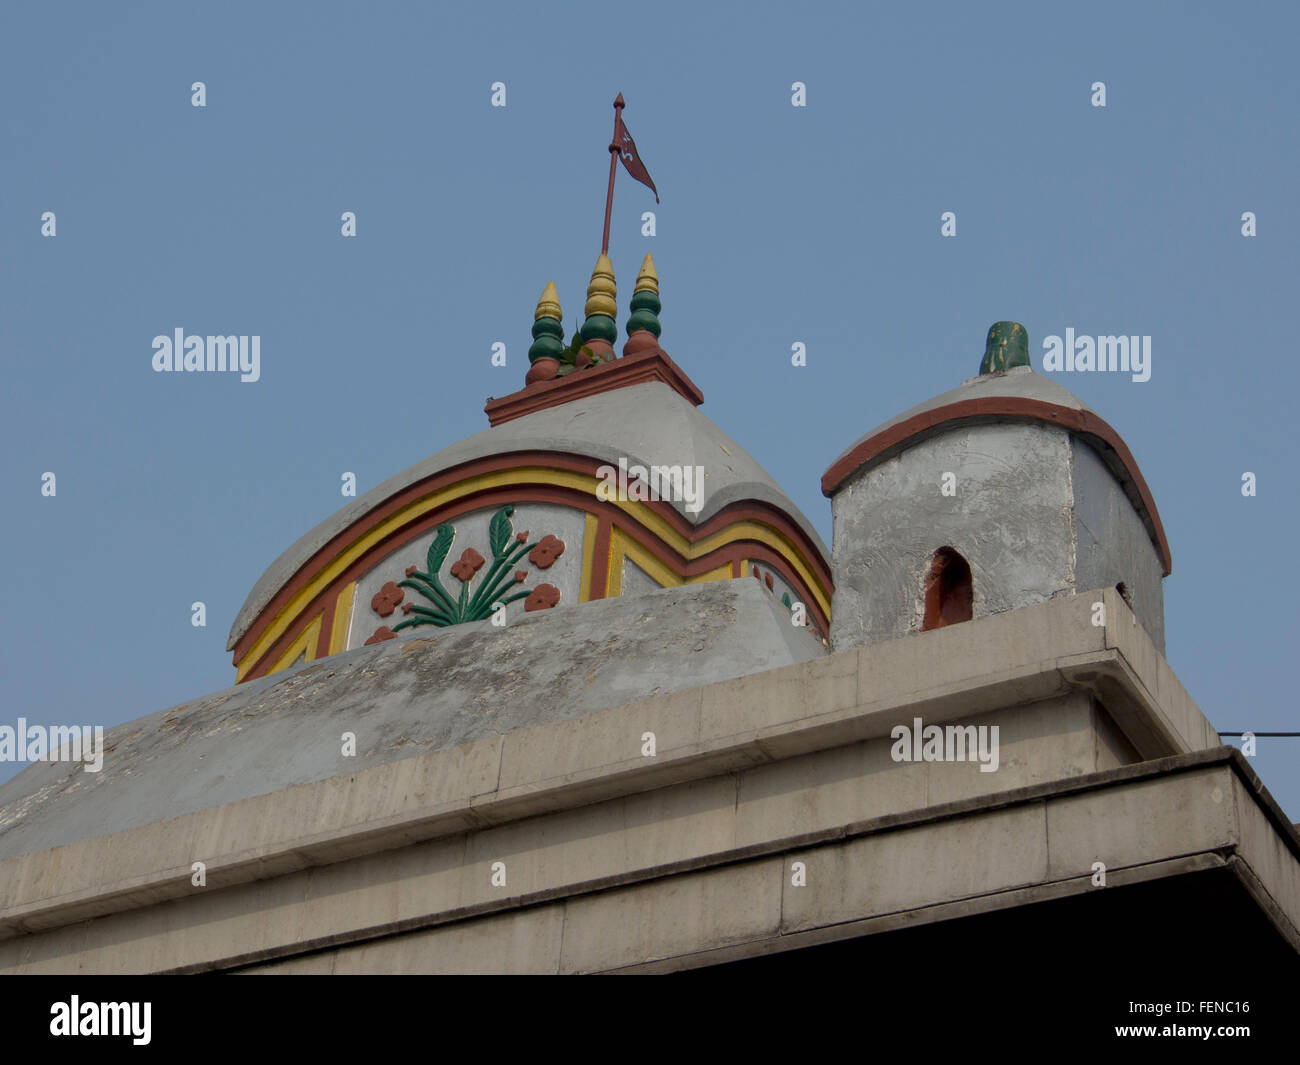 The Kalighat temple in Kolkata, India Stock Photo